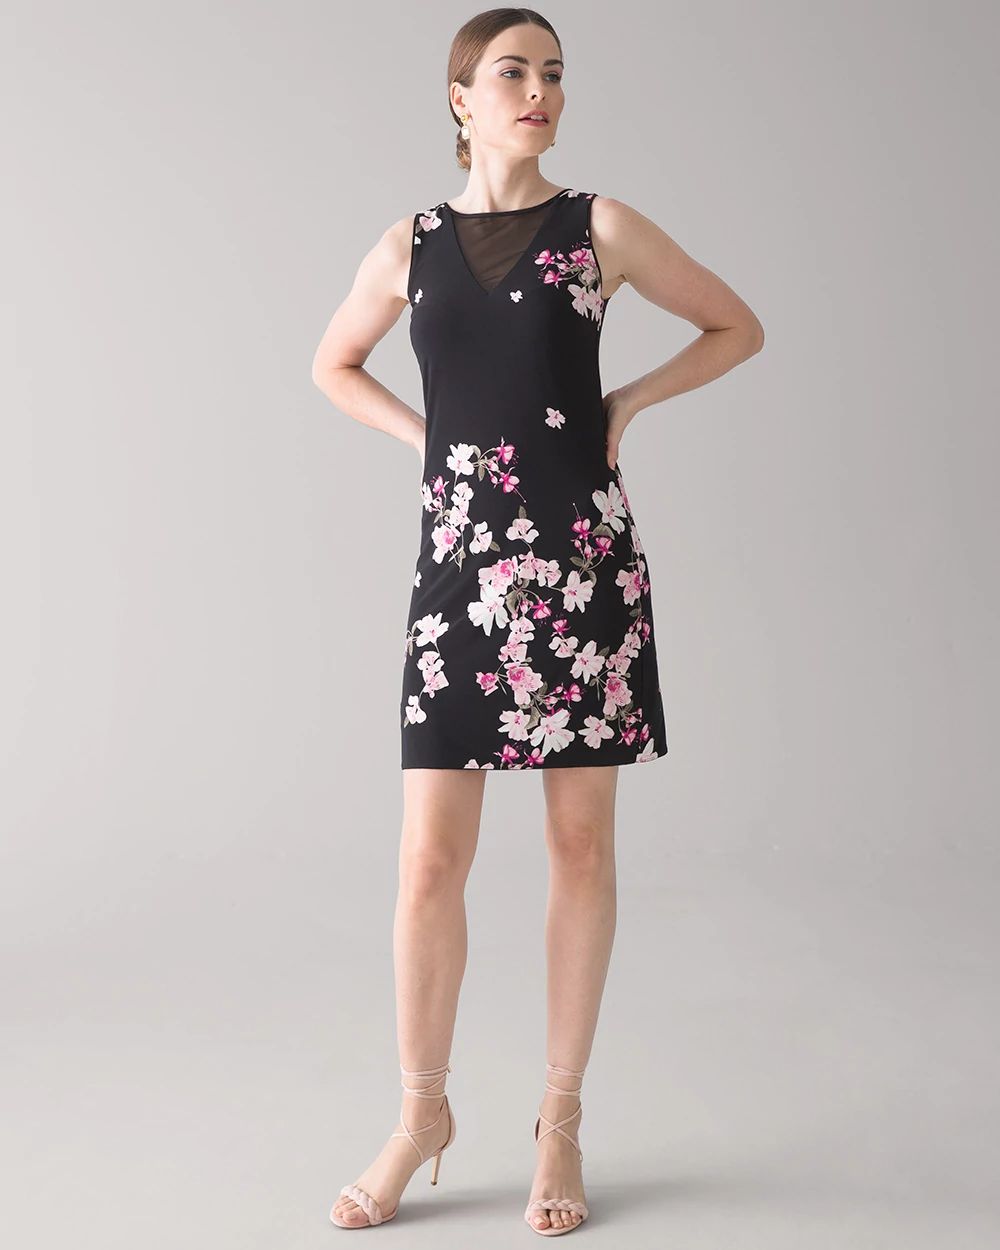 Sleeveless Matte Jersey Reversible Dress click to view larger image.